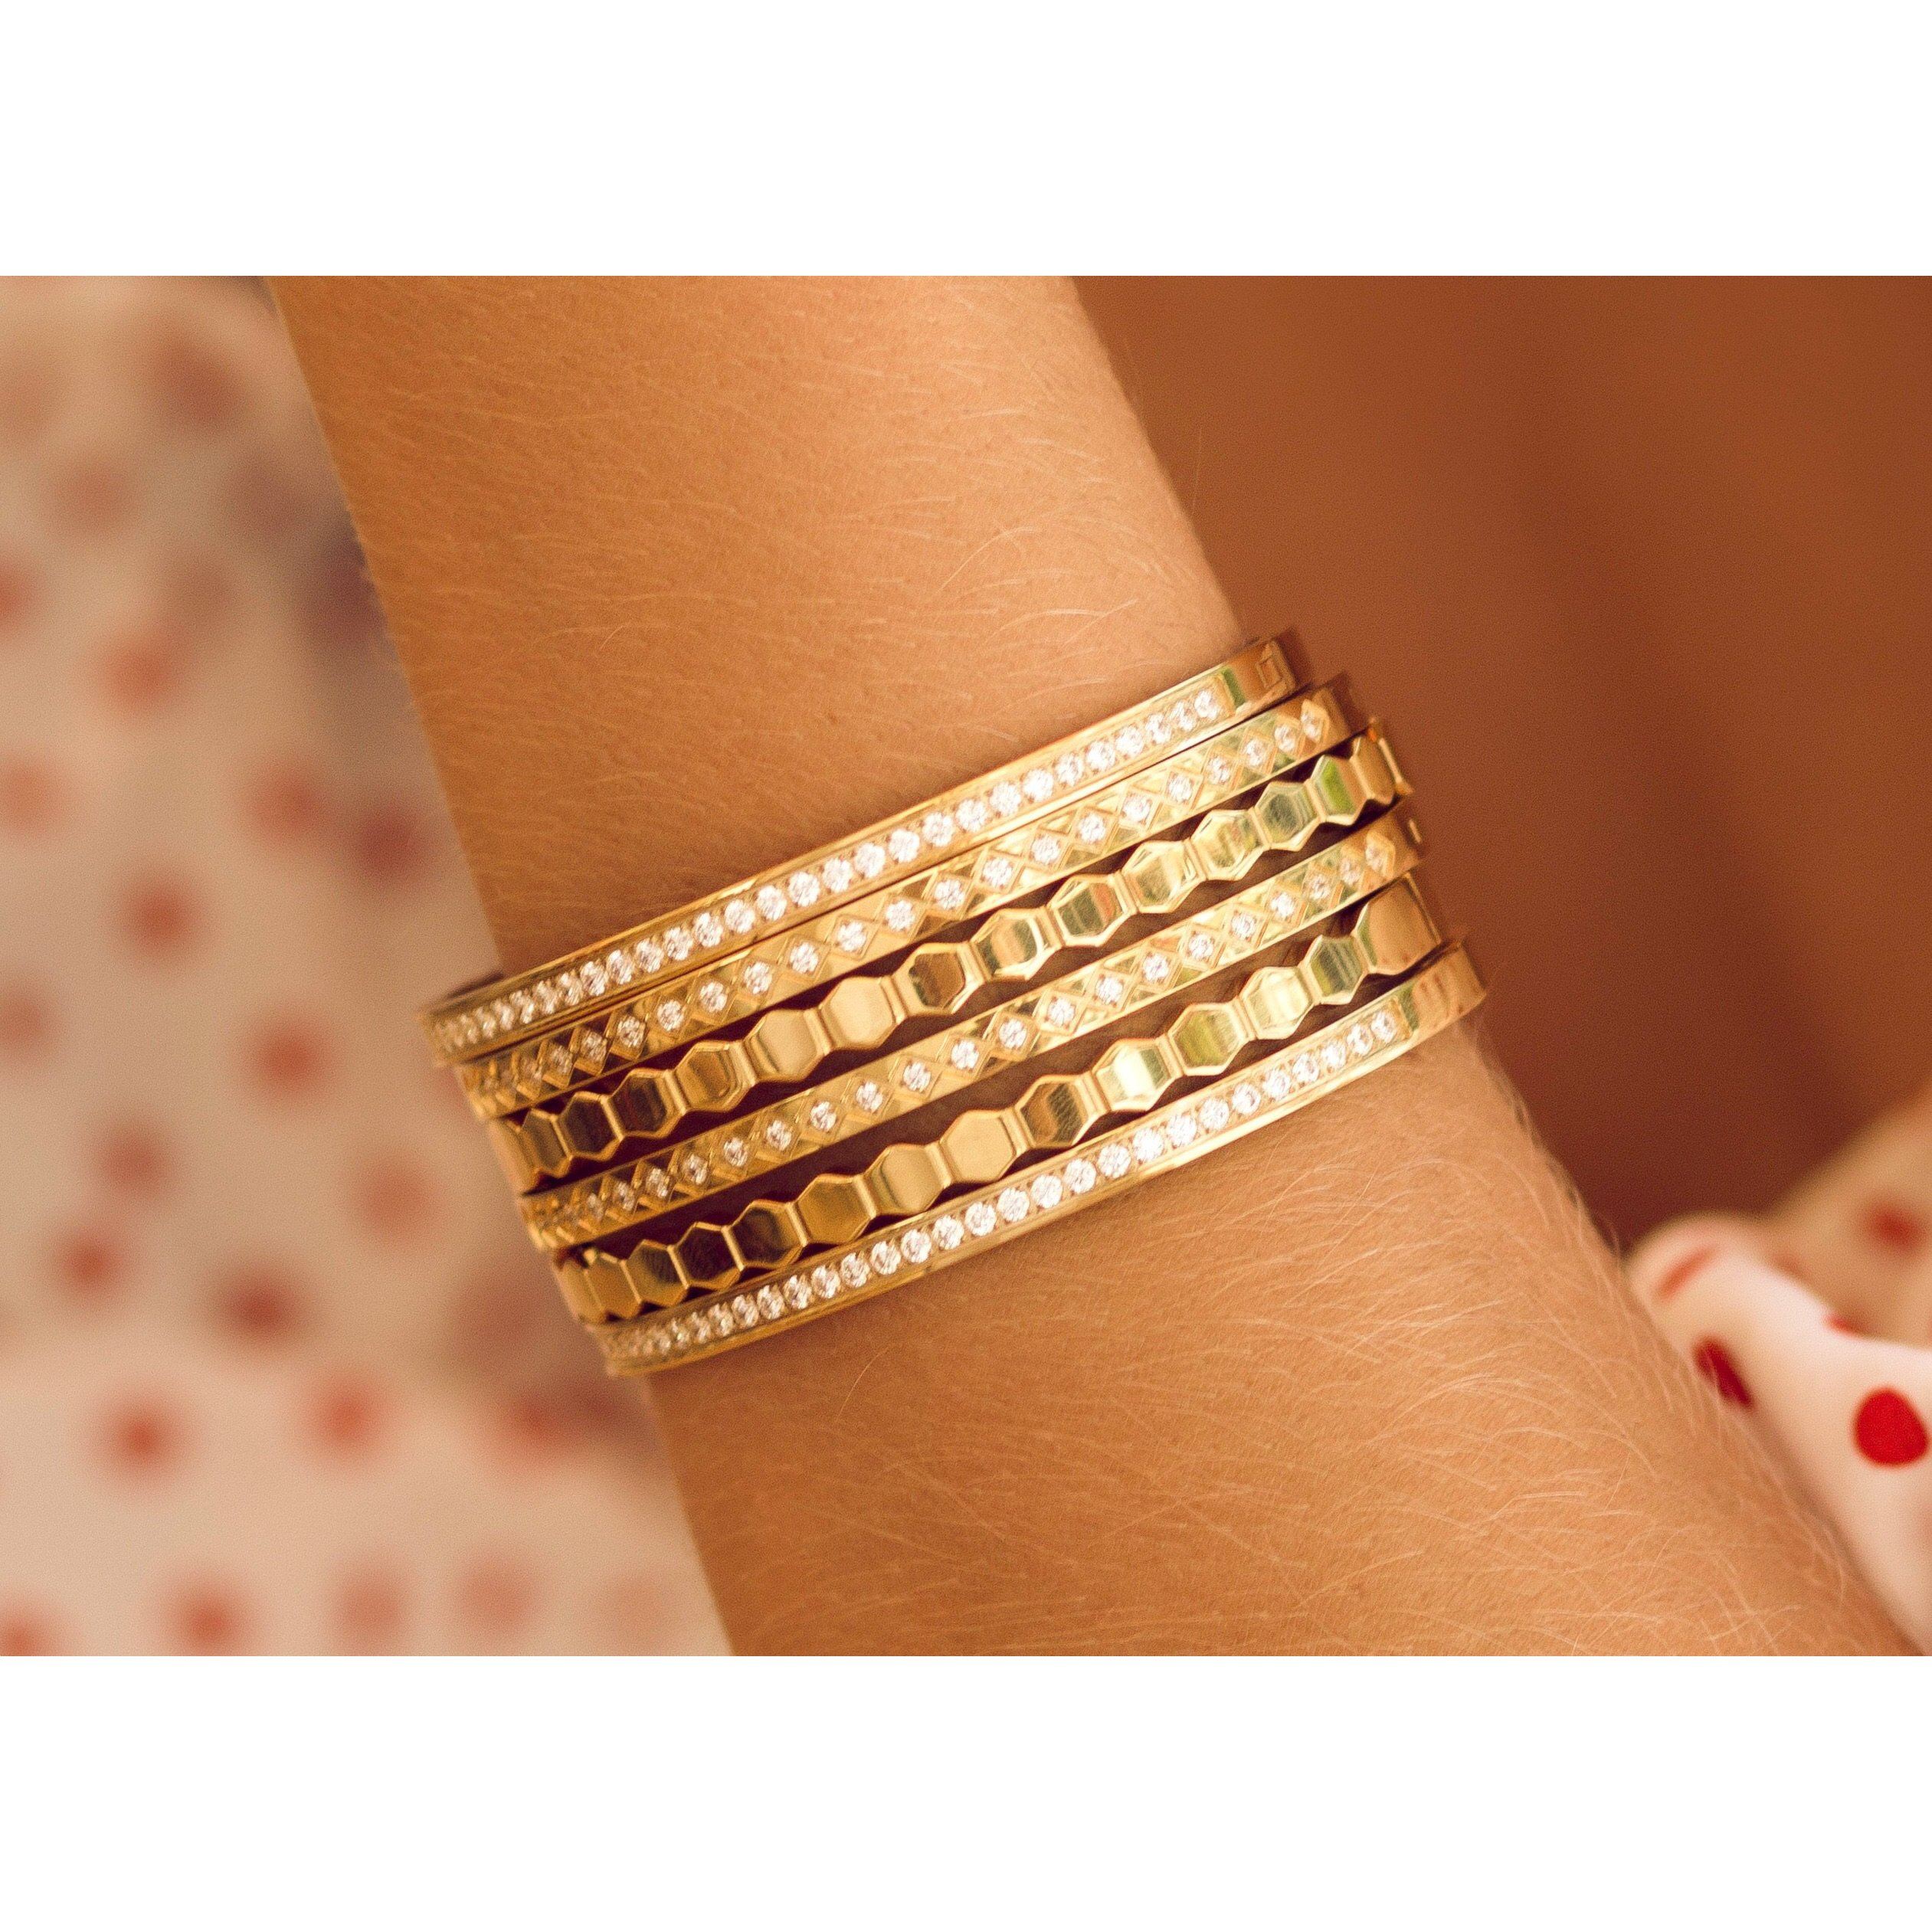 18k Gold Plated Diamond Cut Bracelet with Cubic Zirconias - 6" Length Bijou Her